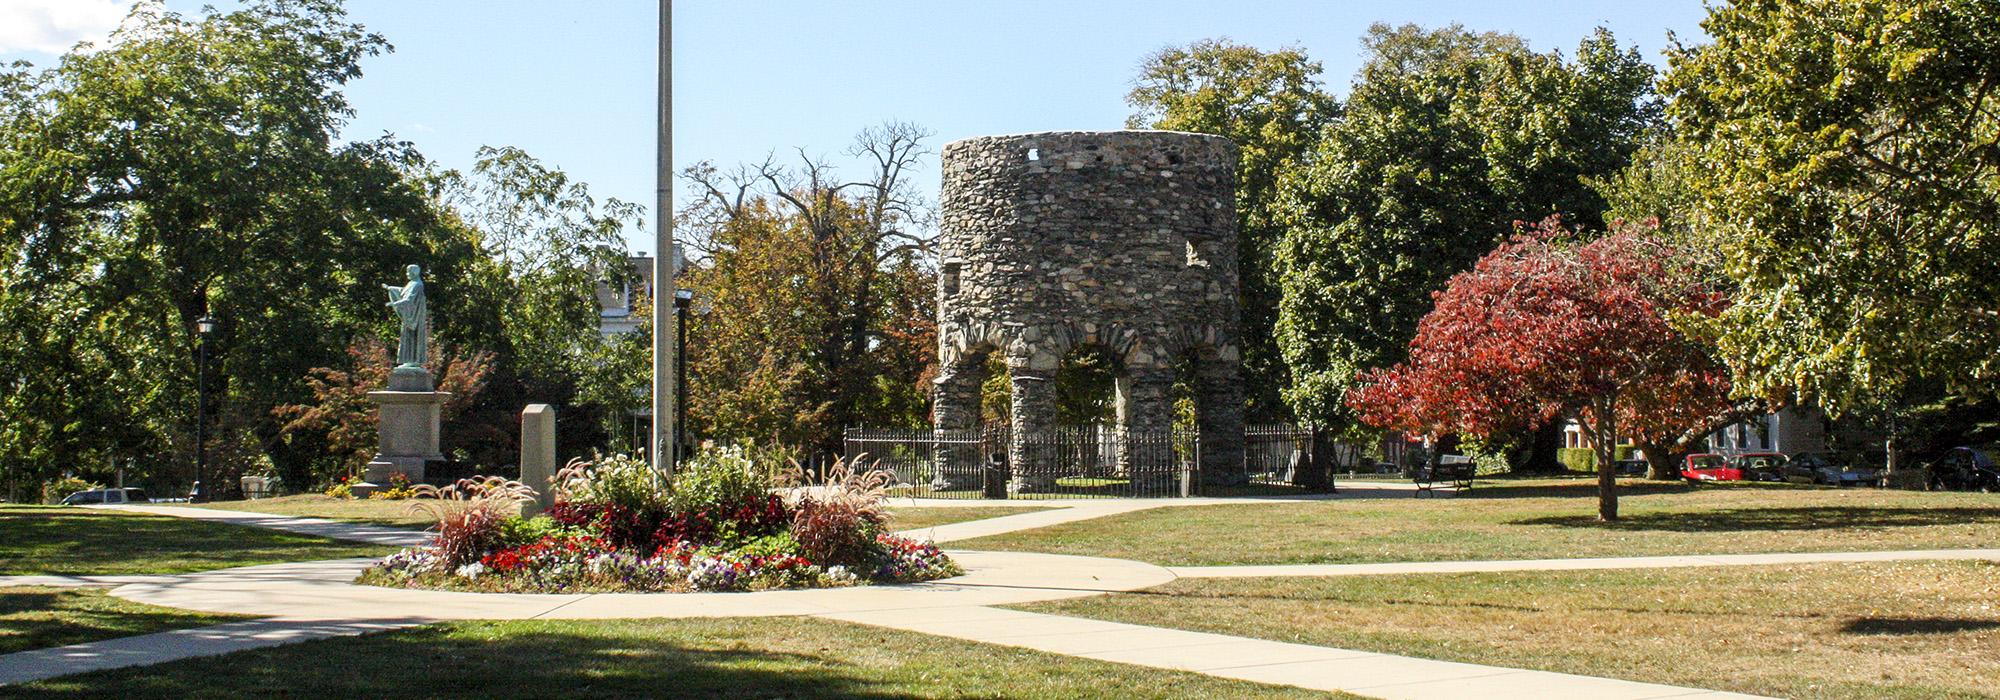 Touro Park and Stone Mill, Newport, RI